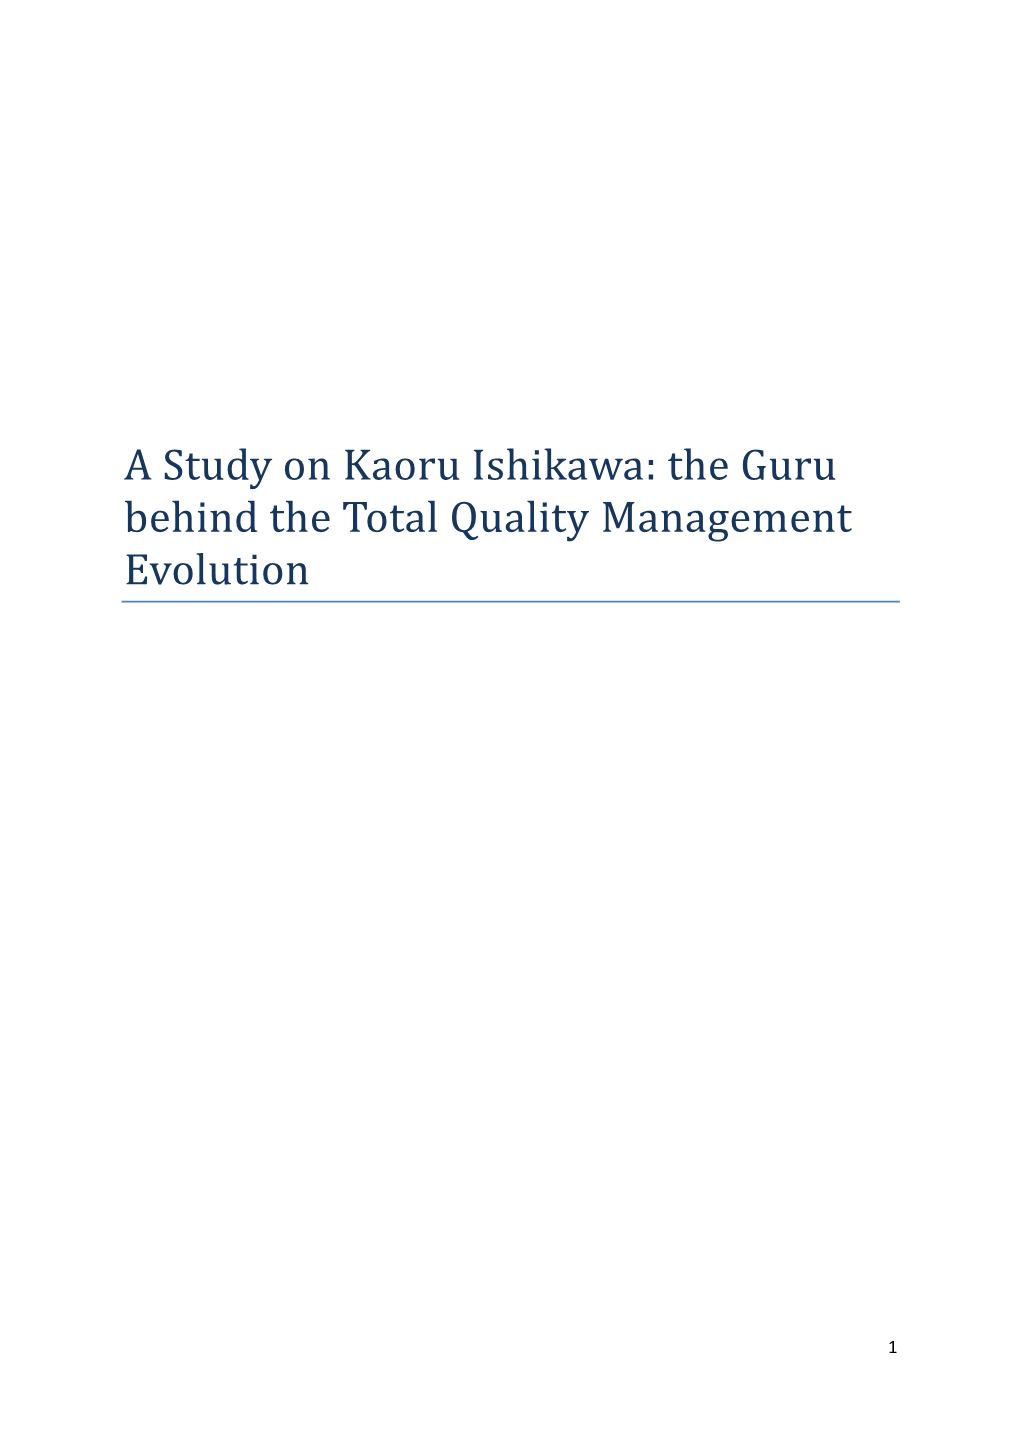 A Study on Kaoru Ishikawa: the Guru Behind the Total Quality Management Evolution